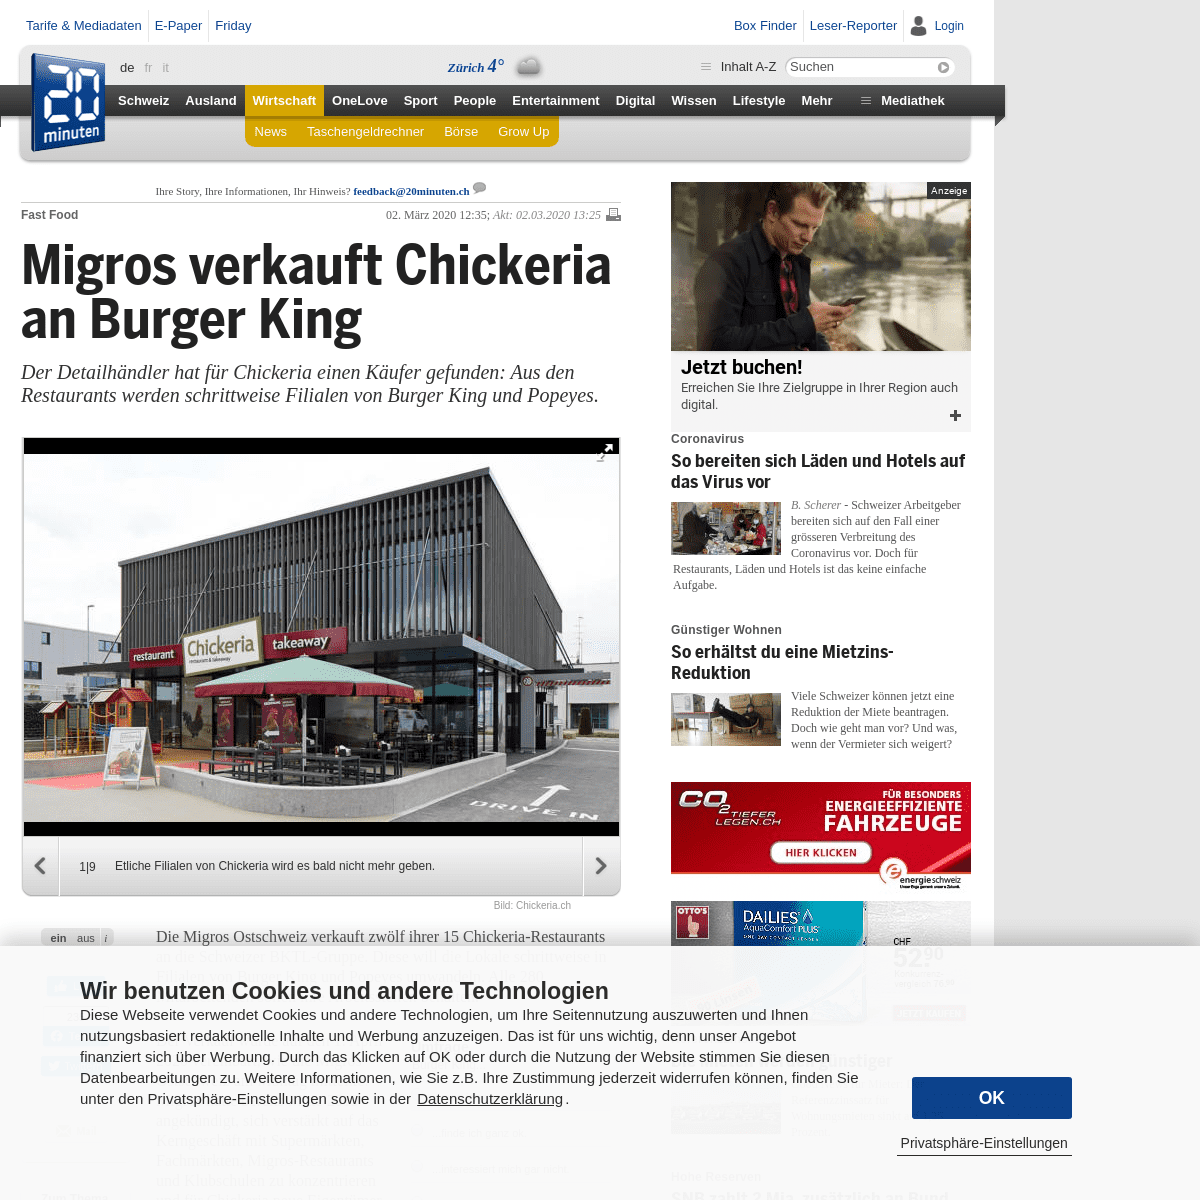 A complete backup of www.20min.ch/finance/news/story/Migros-verkauft-Chickeria-an-Burger-King-16159017